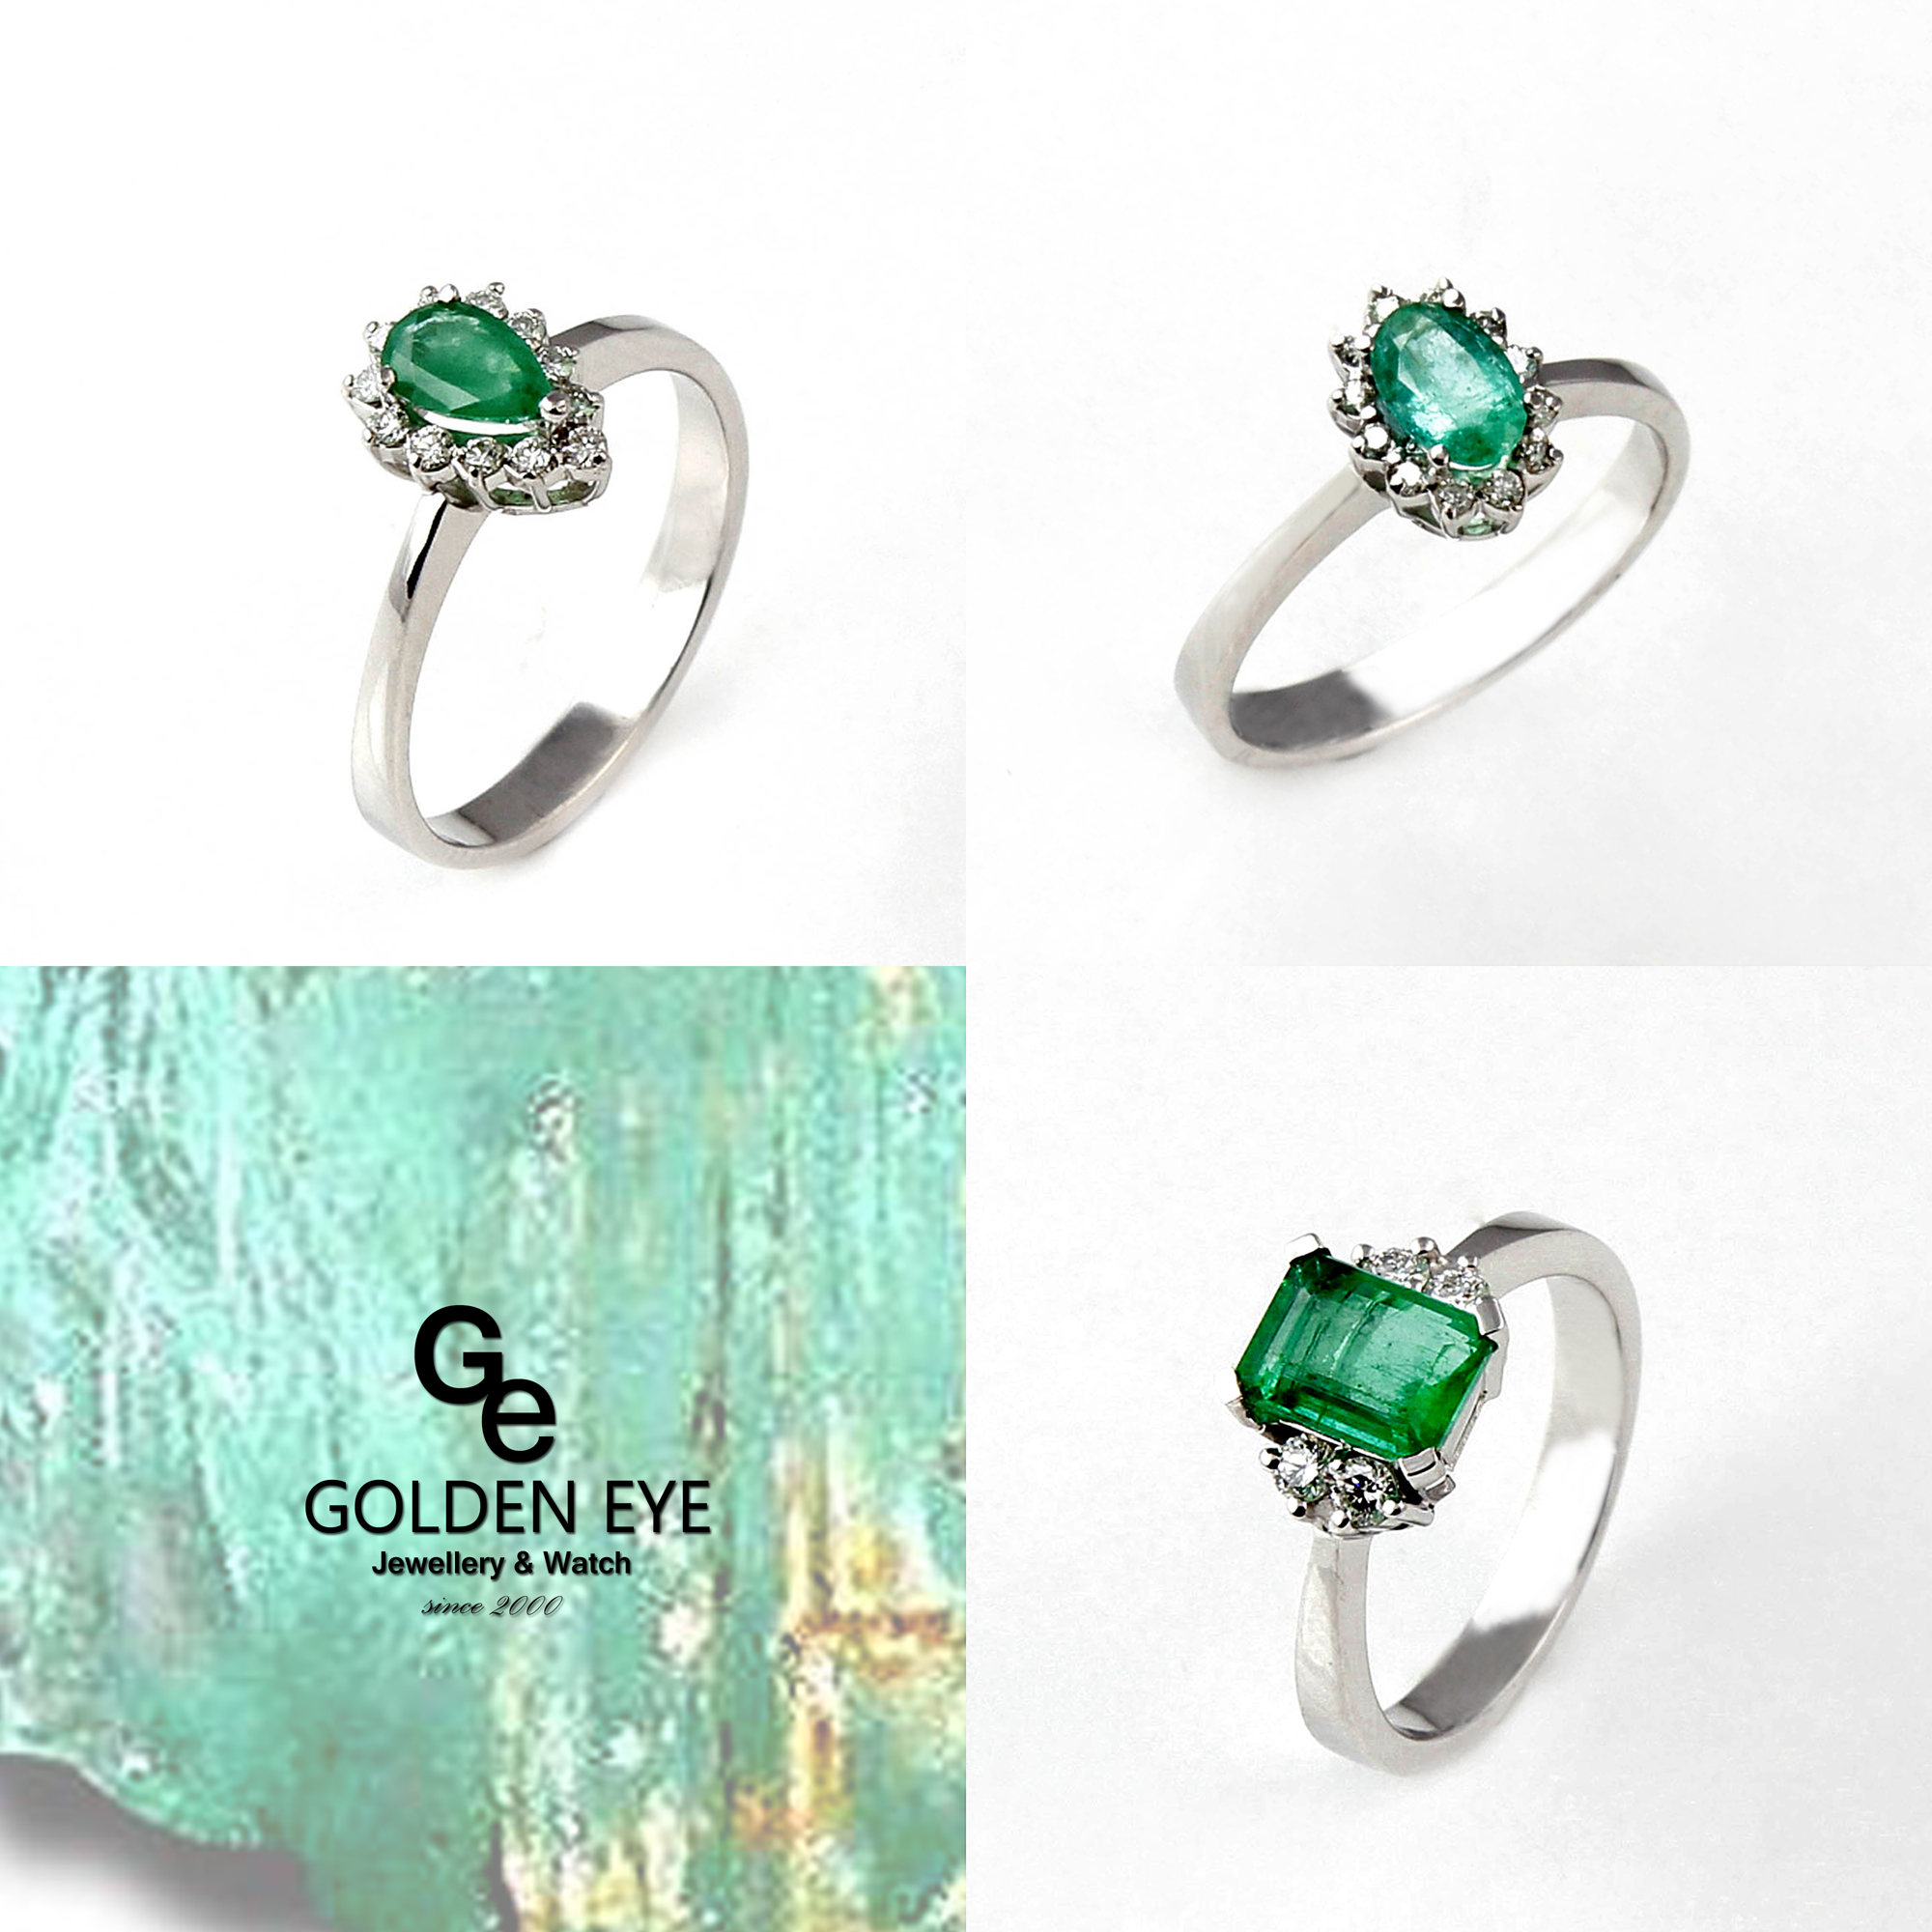 R035B hvid guld Ring med Emerald og diamanter